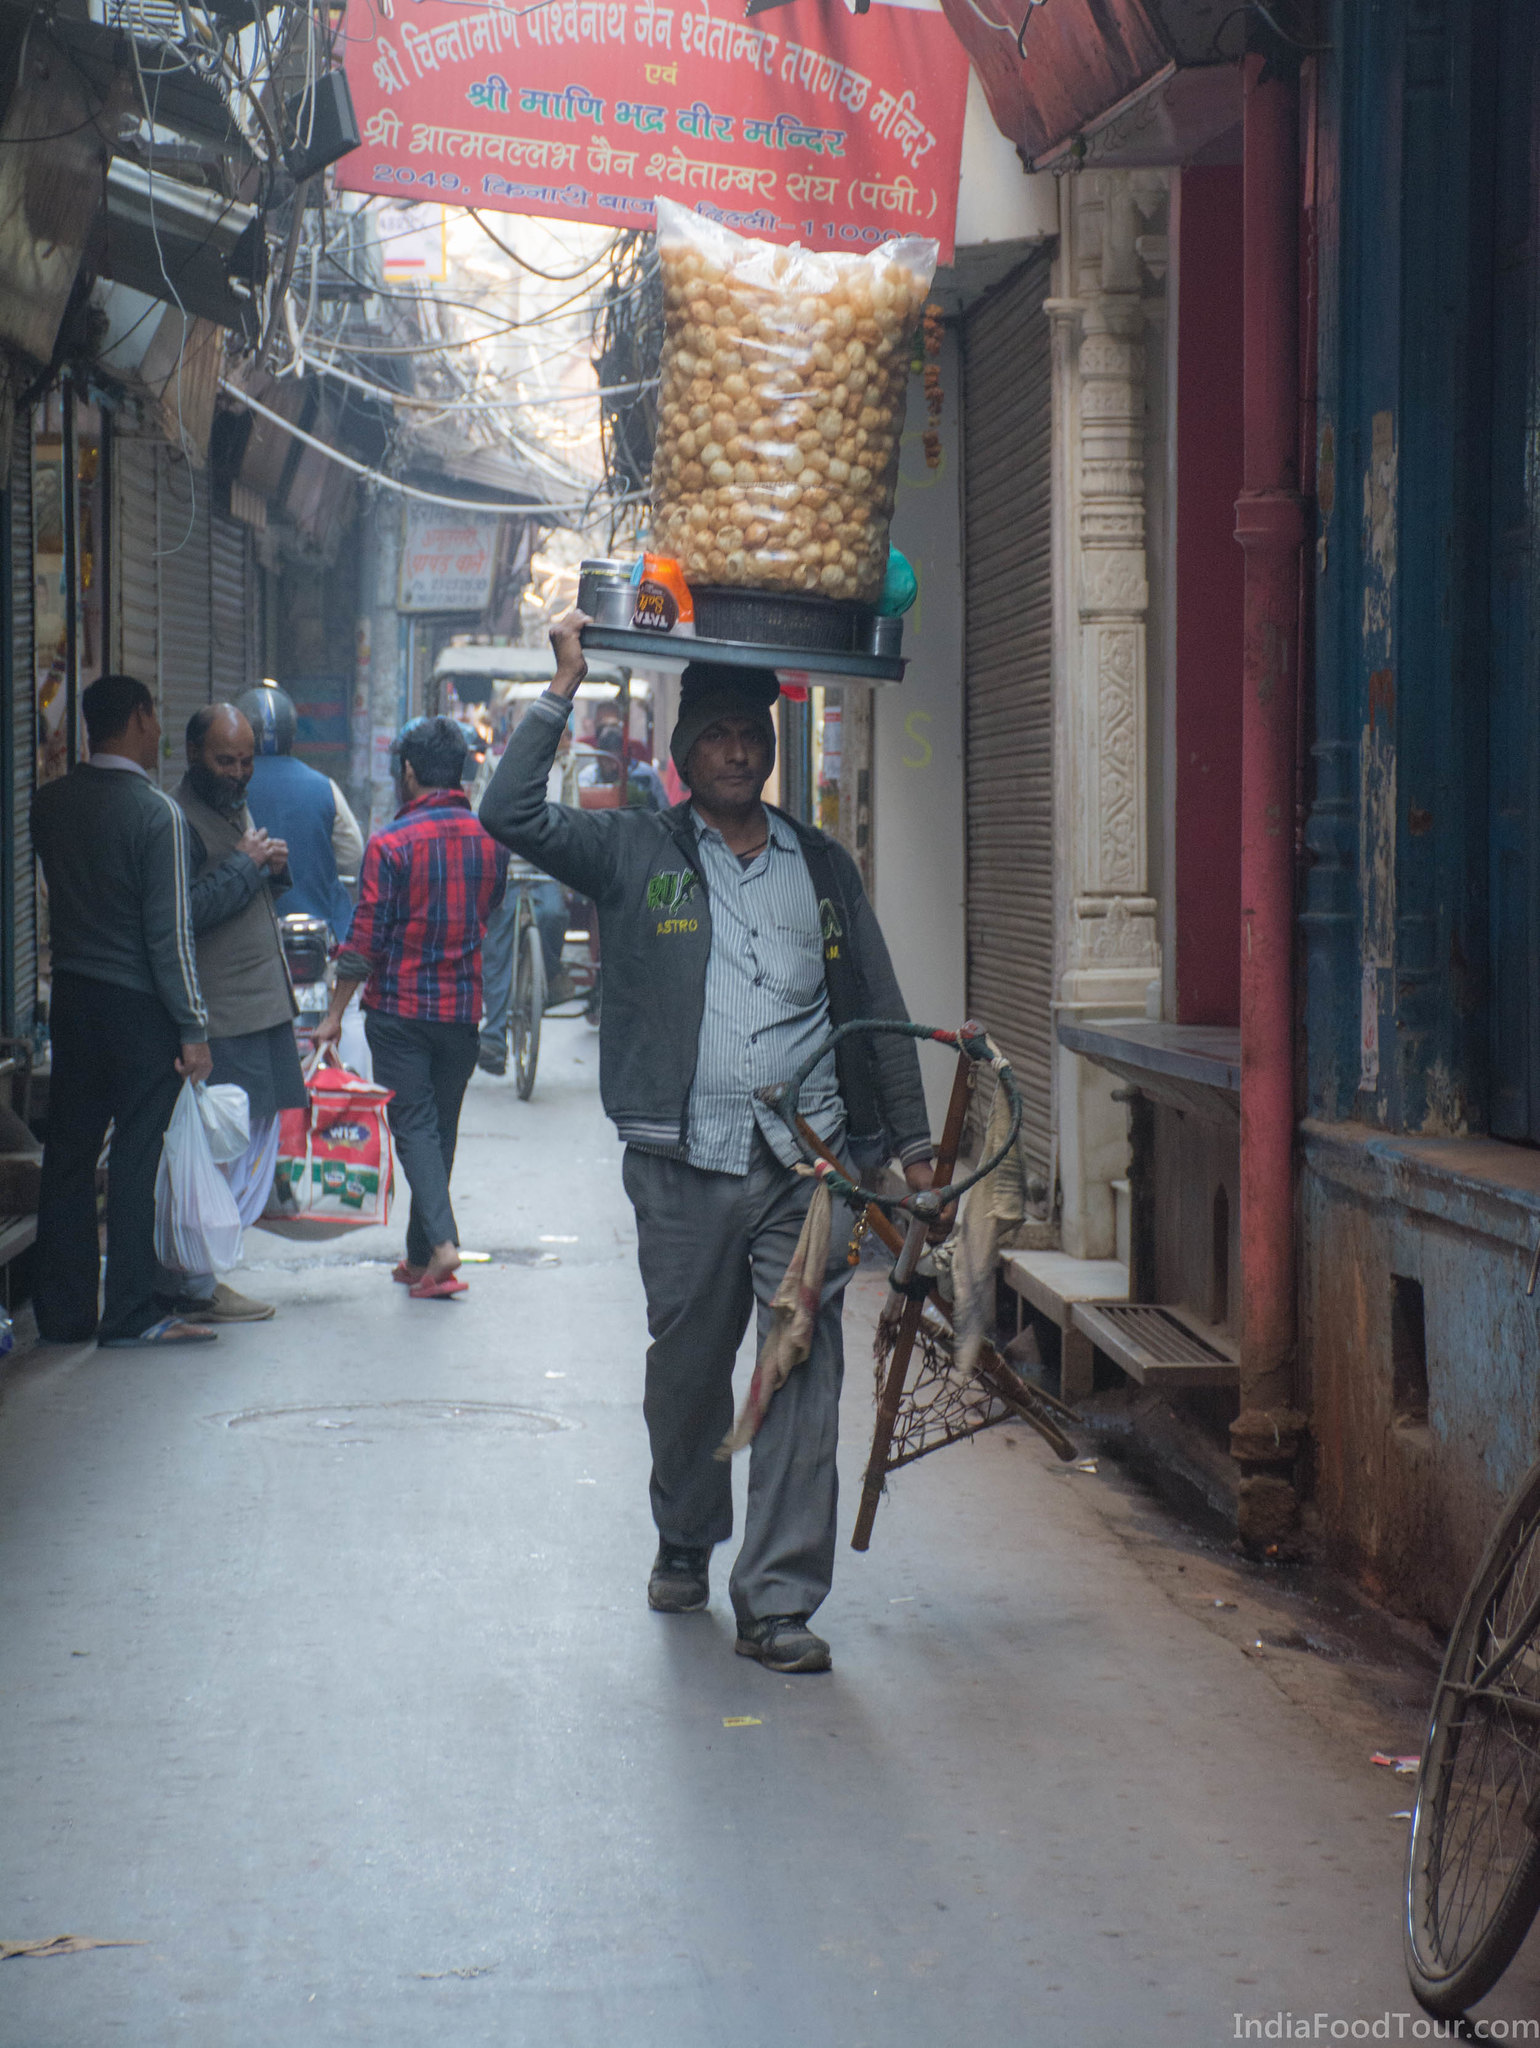 A Golgappa seller passing through a narrow street